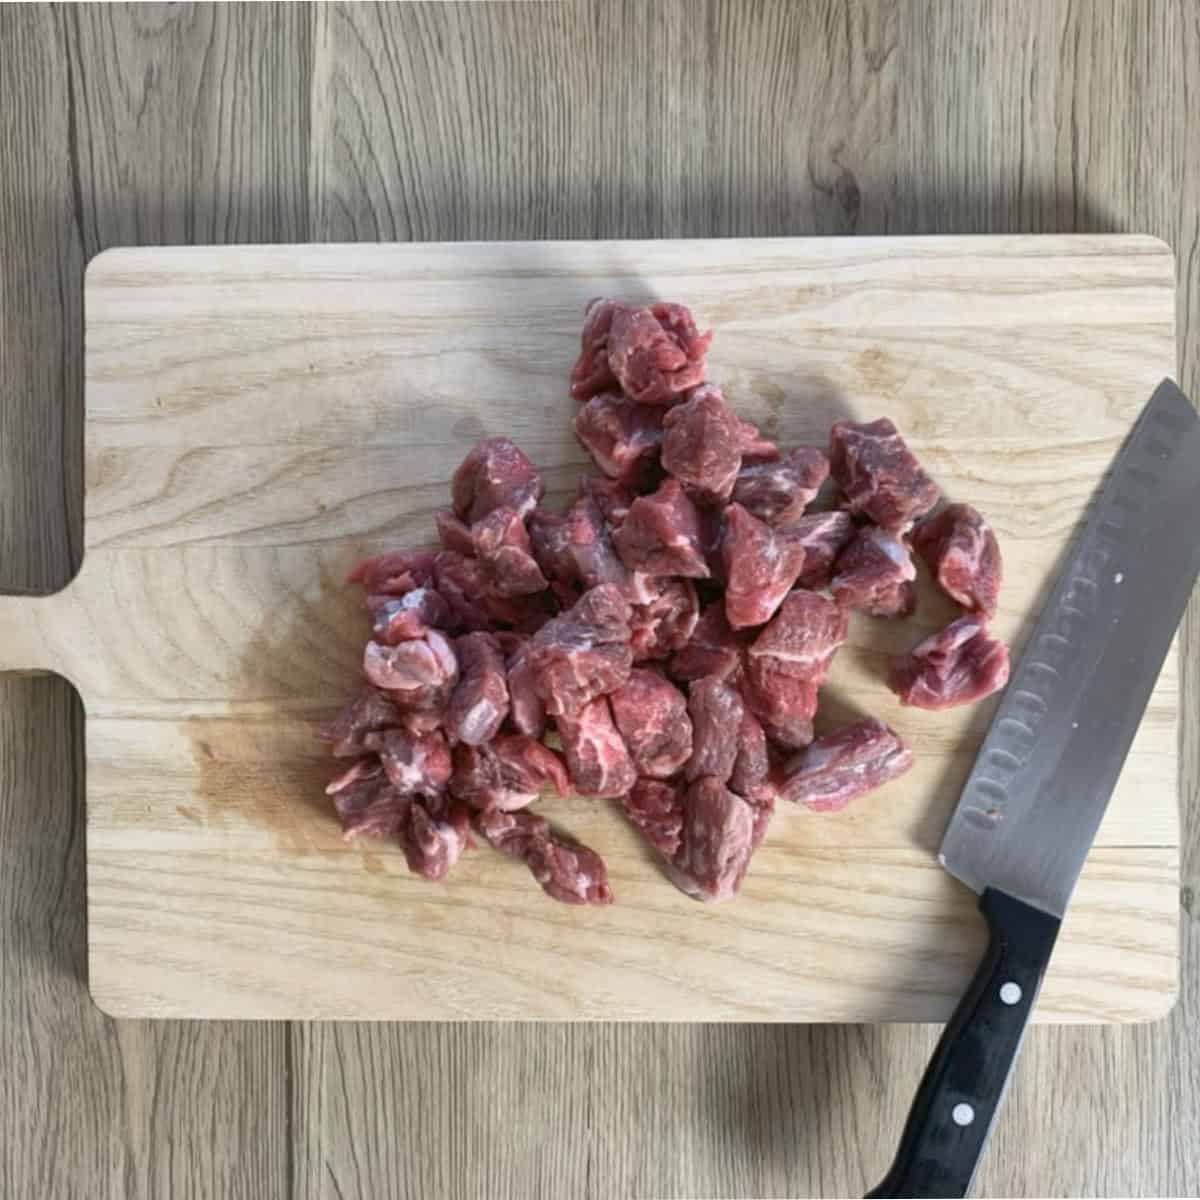 Three-bean-chili beef chunks on a cutting board.